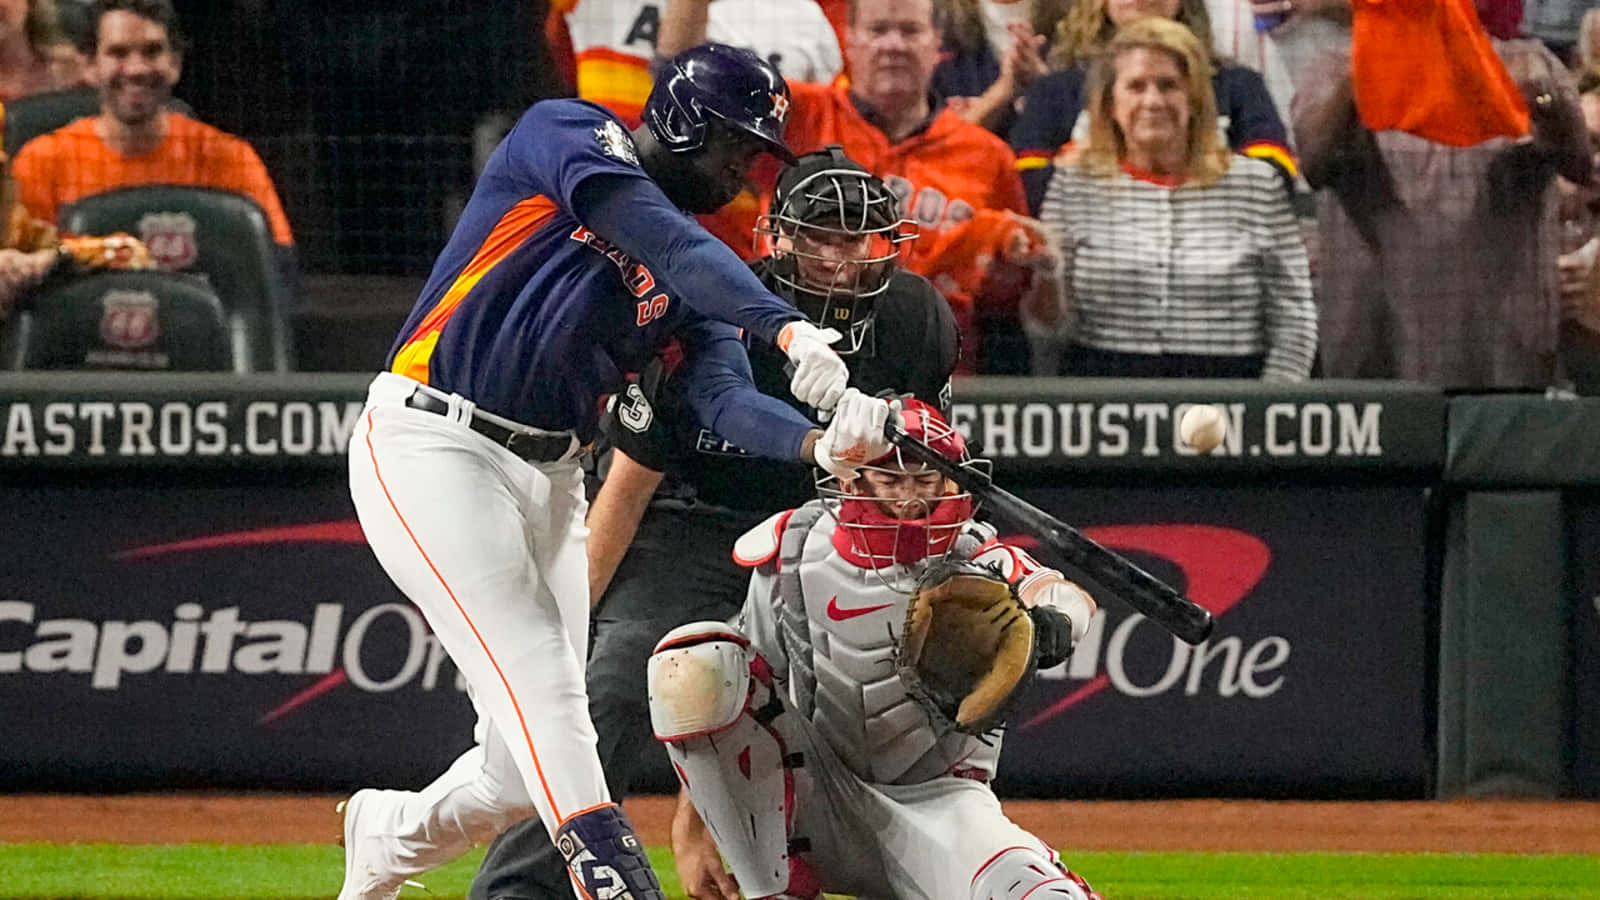 Astros Player Hitting Baseball During Game Wallpaper